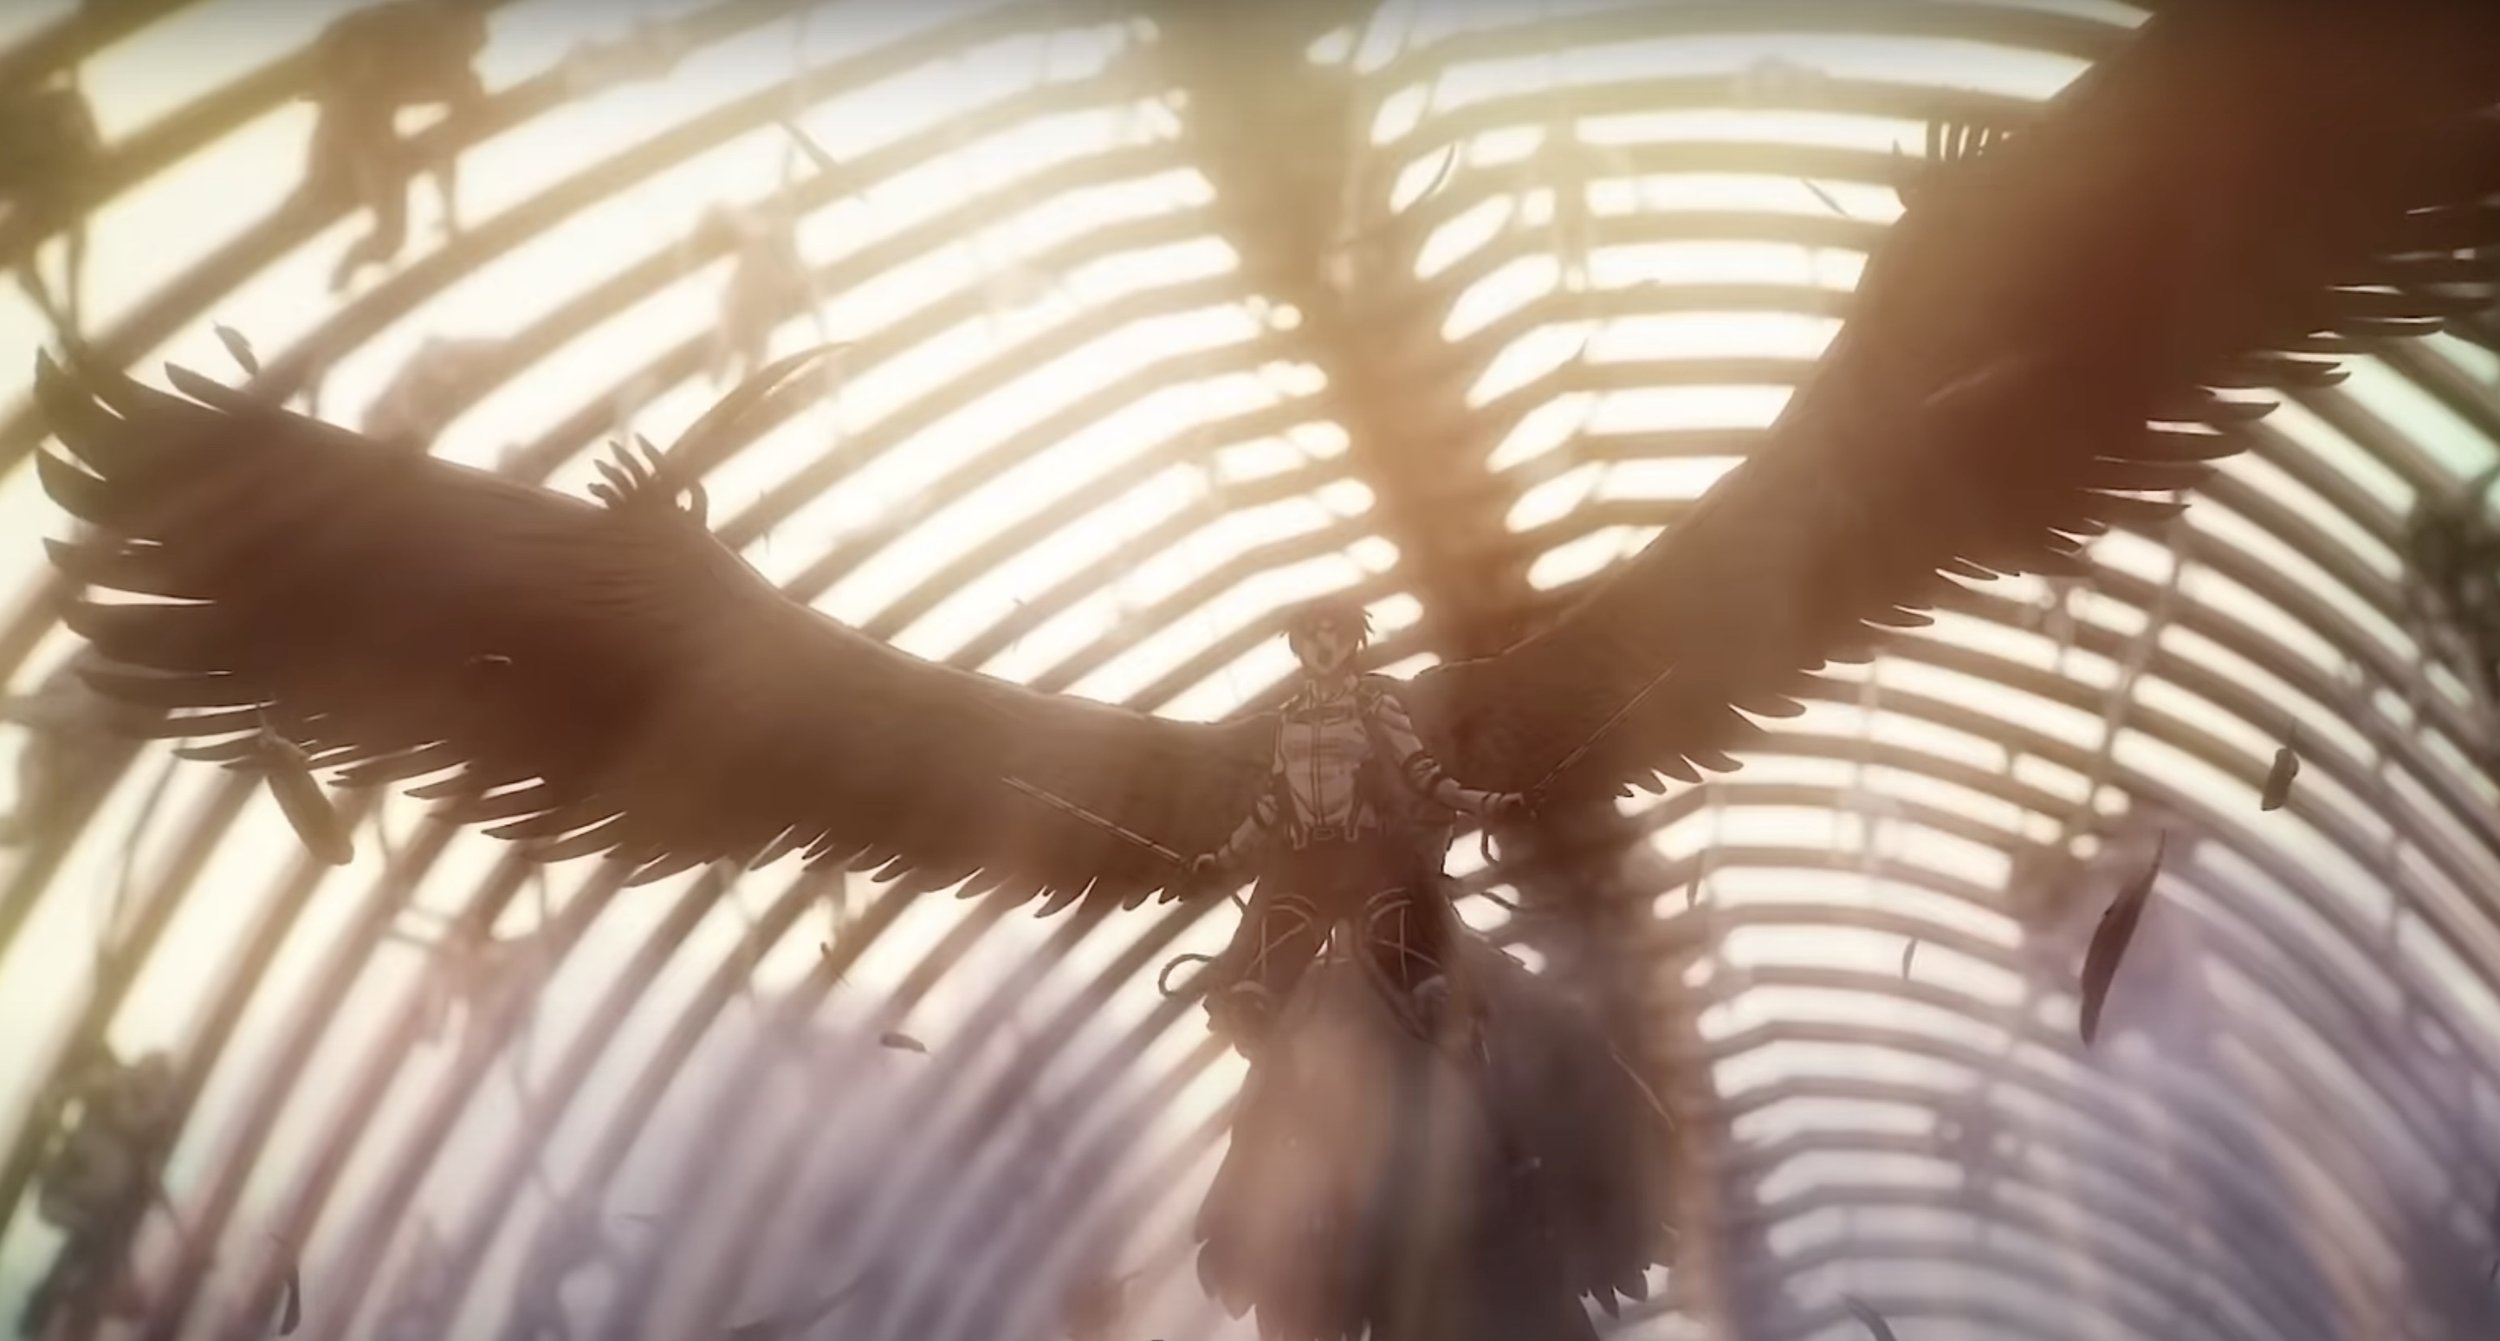 Attack on Titan Final Season Part 3' Lands New Trailer Teasing